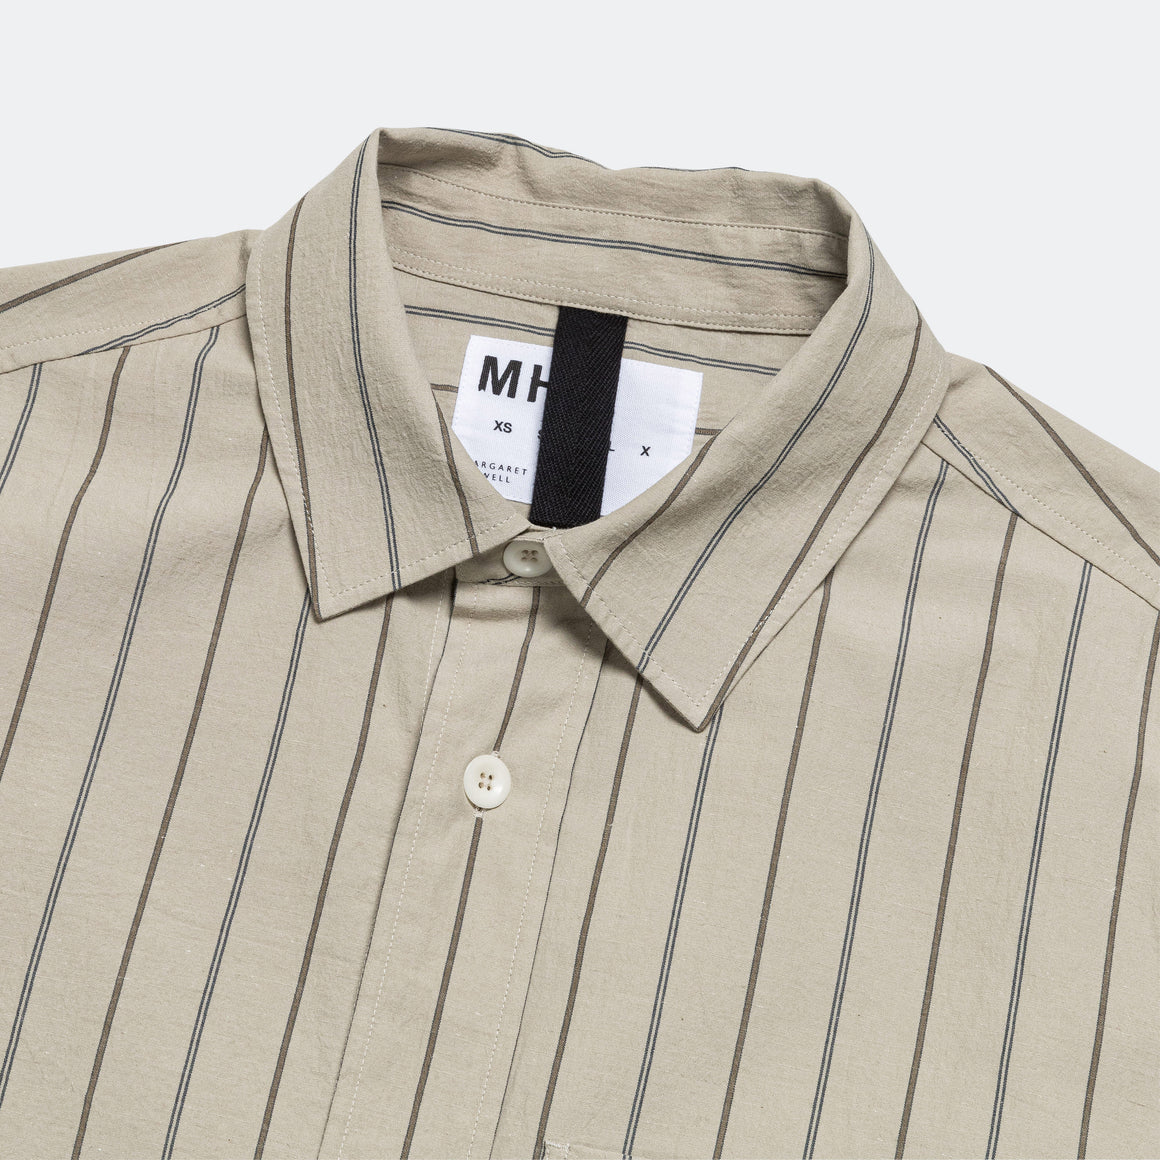 Overall Shirt - Stone/Navy Wide Stripe Cotton Linen